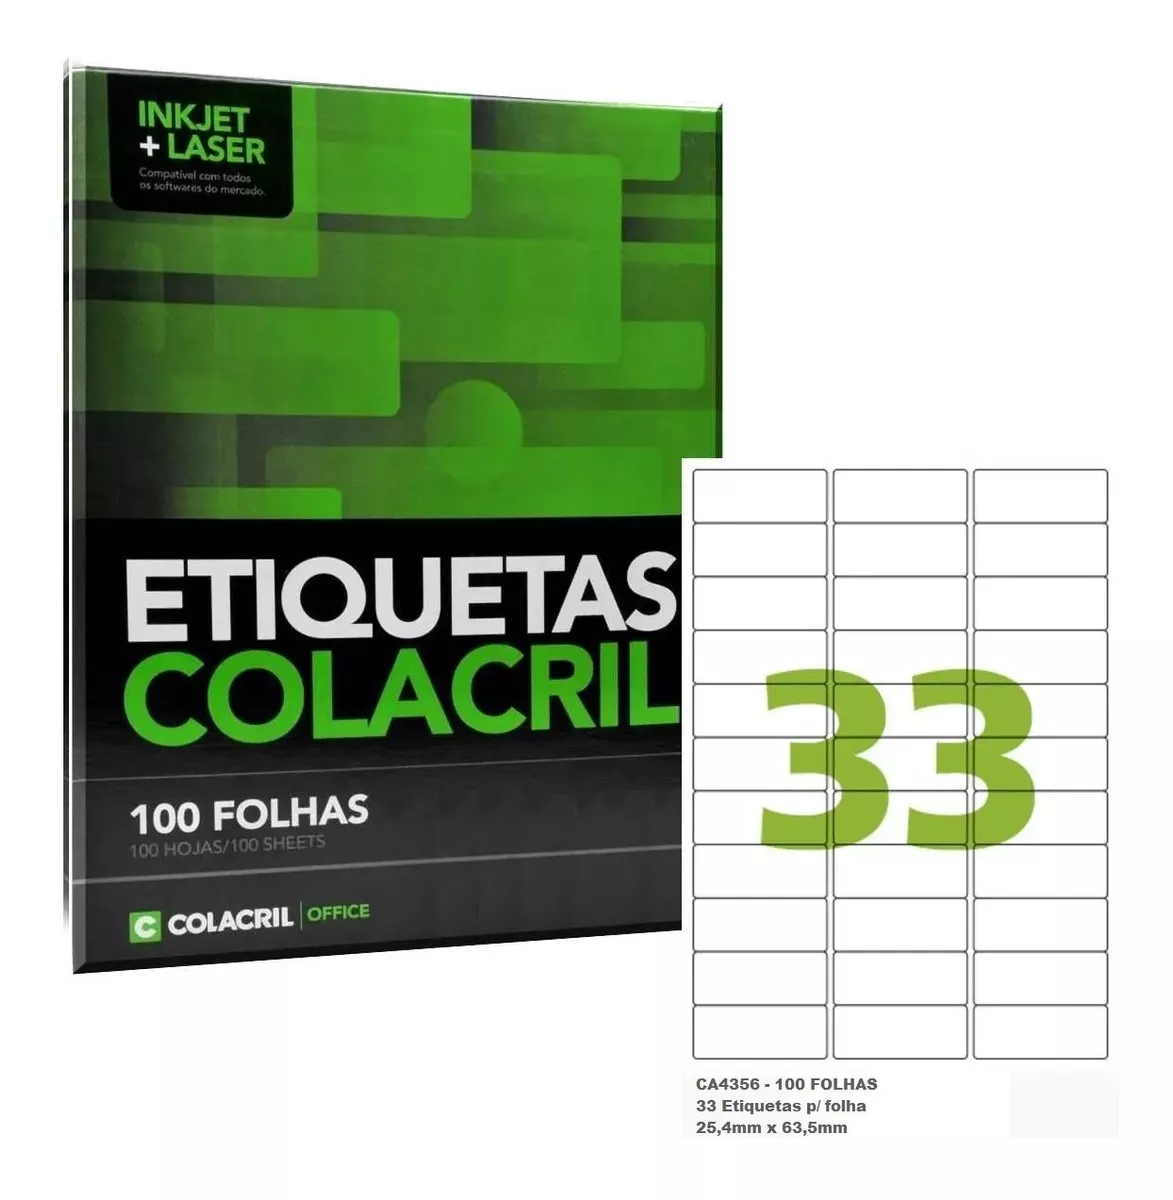 100 Folhas Etiquetas Colacril A4 - Ca4356 (33 Etiq./folha)